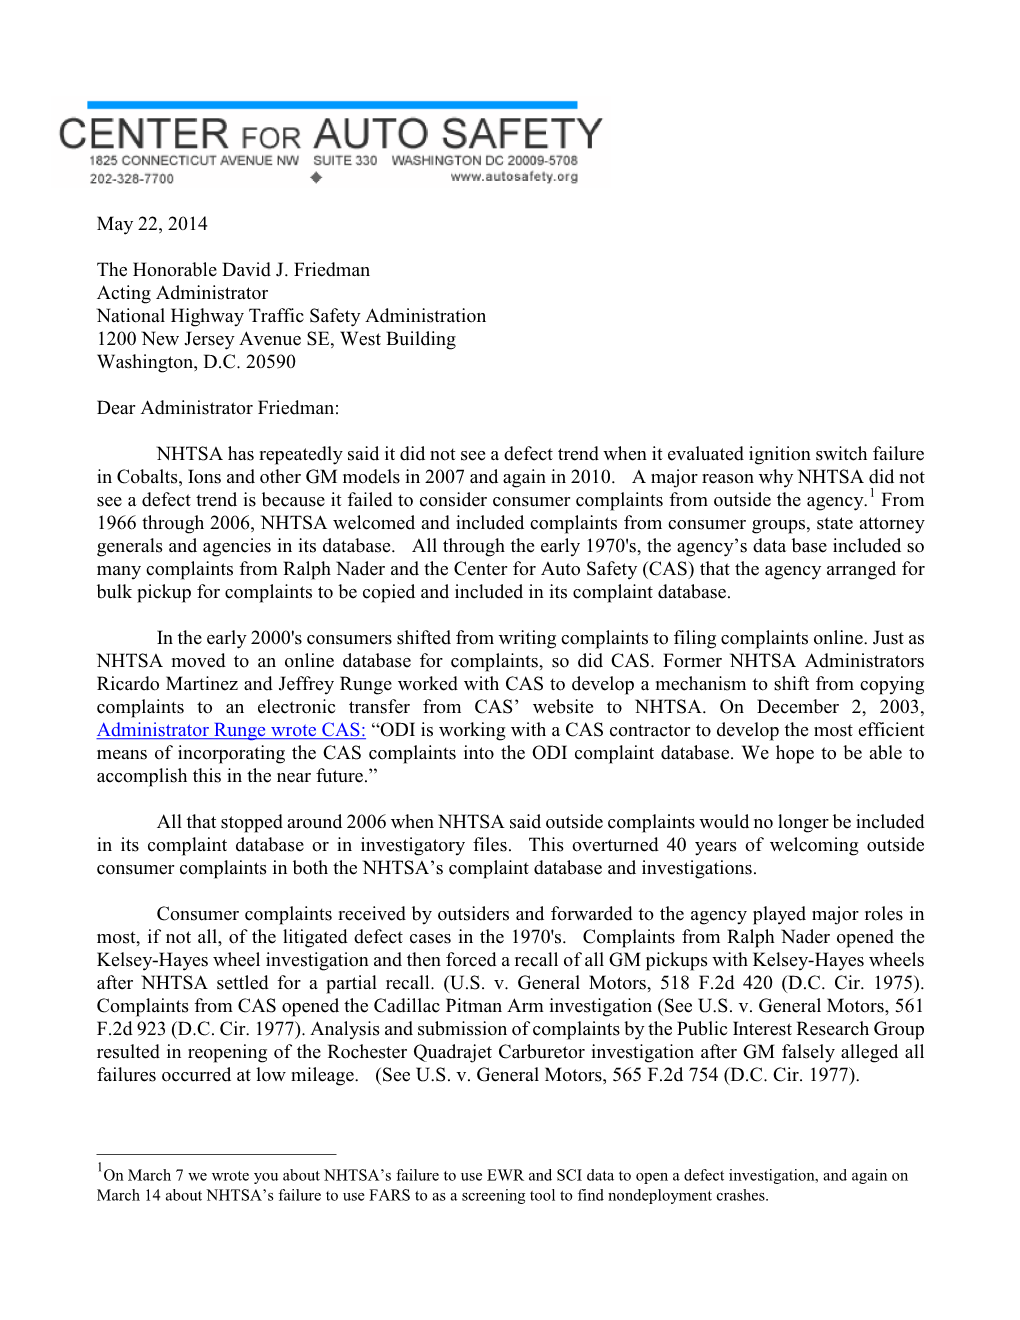 CAS Letter to NHTSA Administrator Friedman